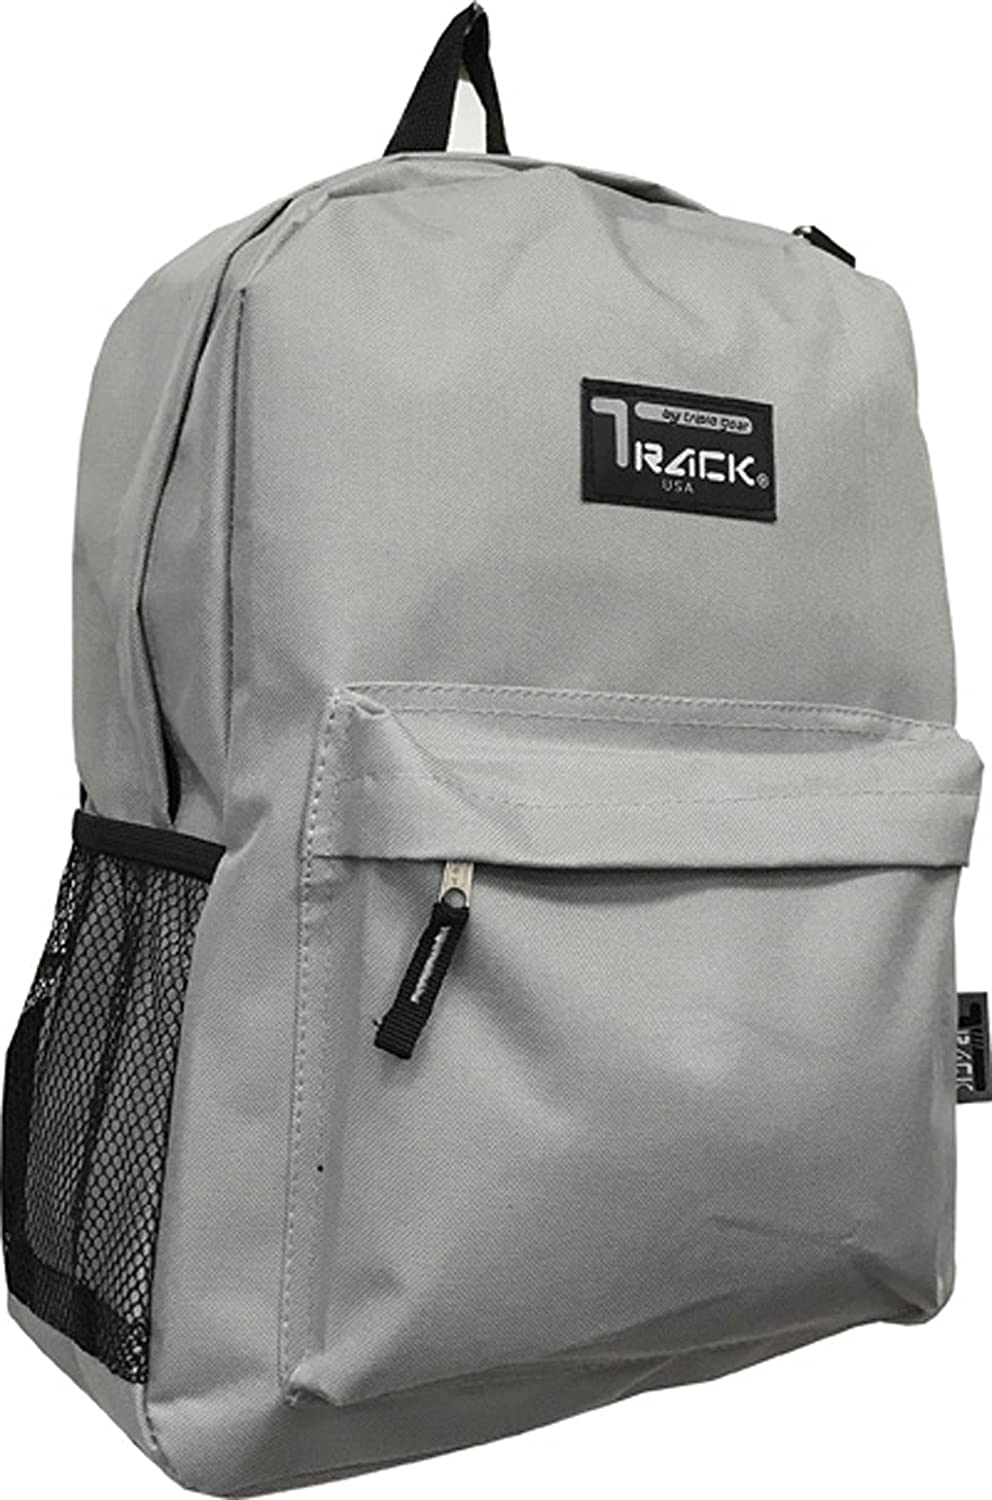 Track Backpack Classic TB205 (Light Gray)